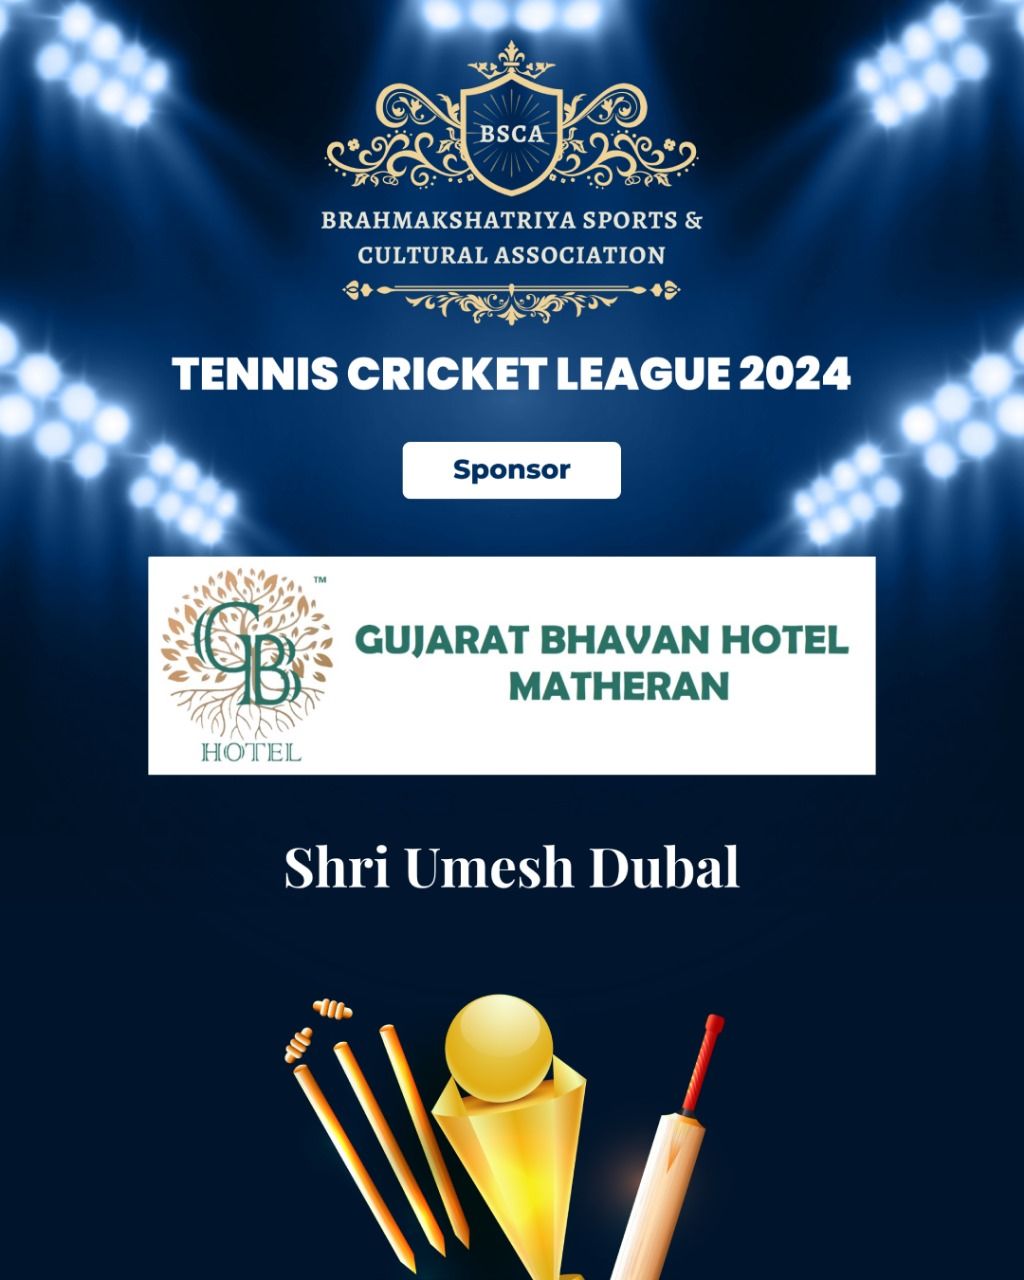 Tennis Cricket League 2024!